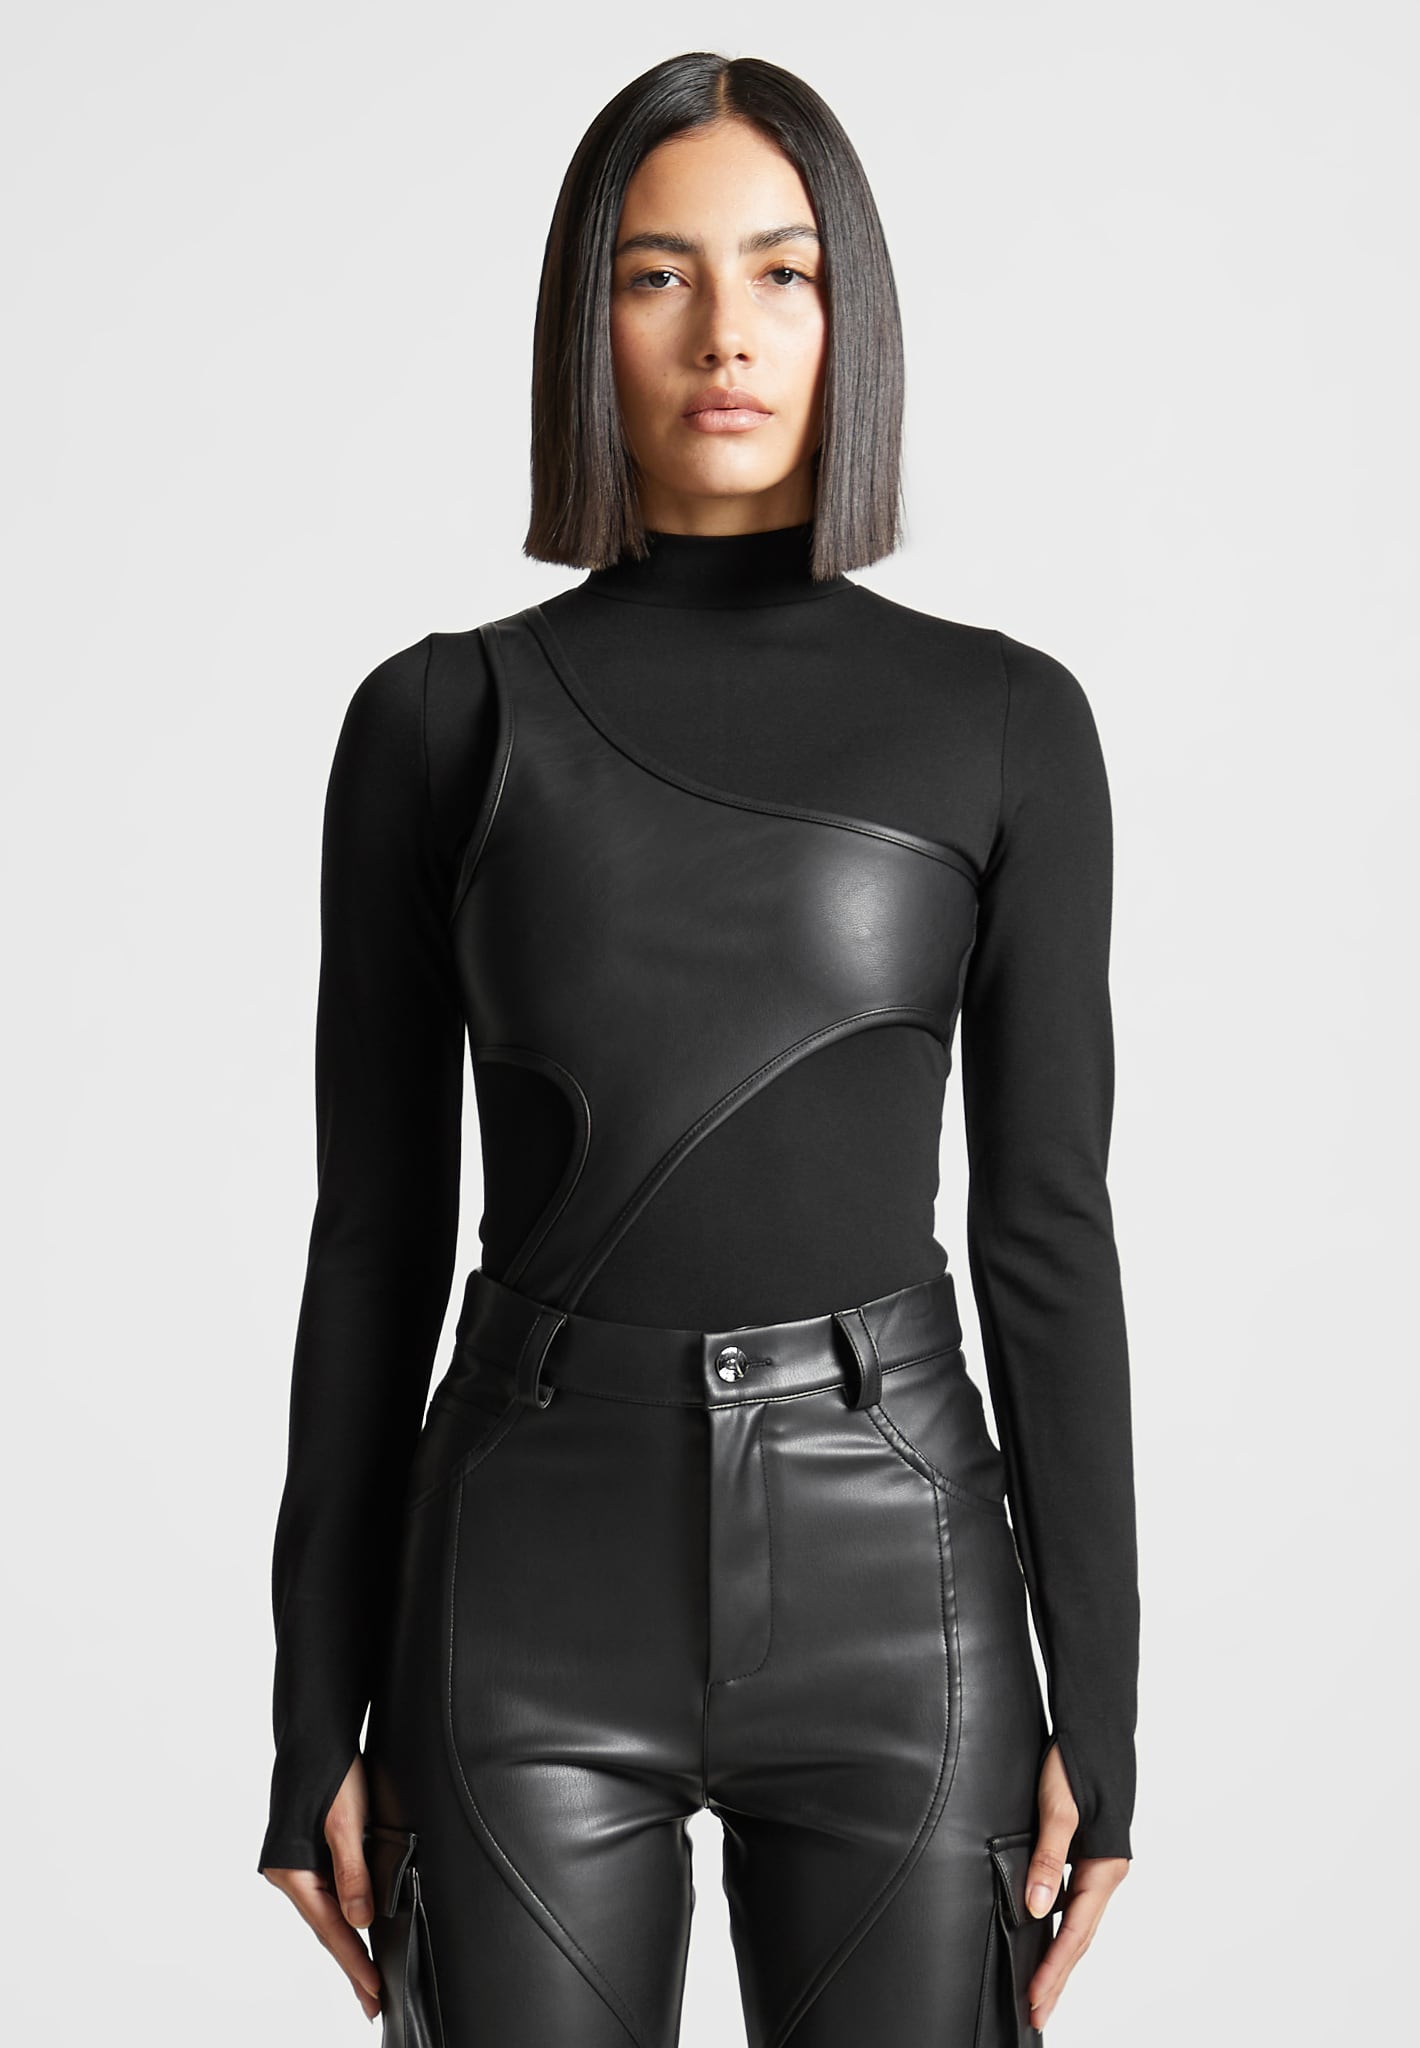 Black Leather Body Suit